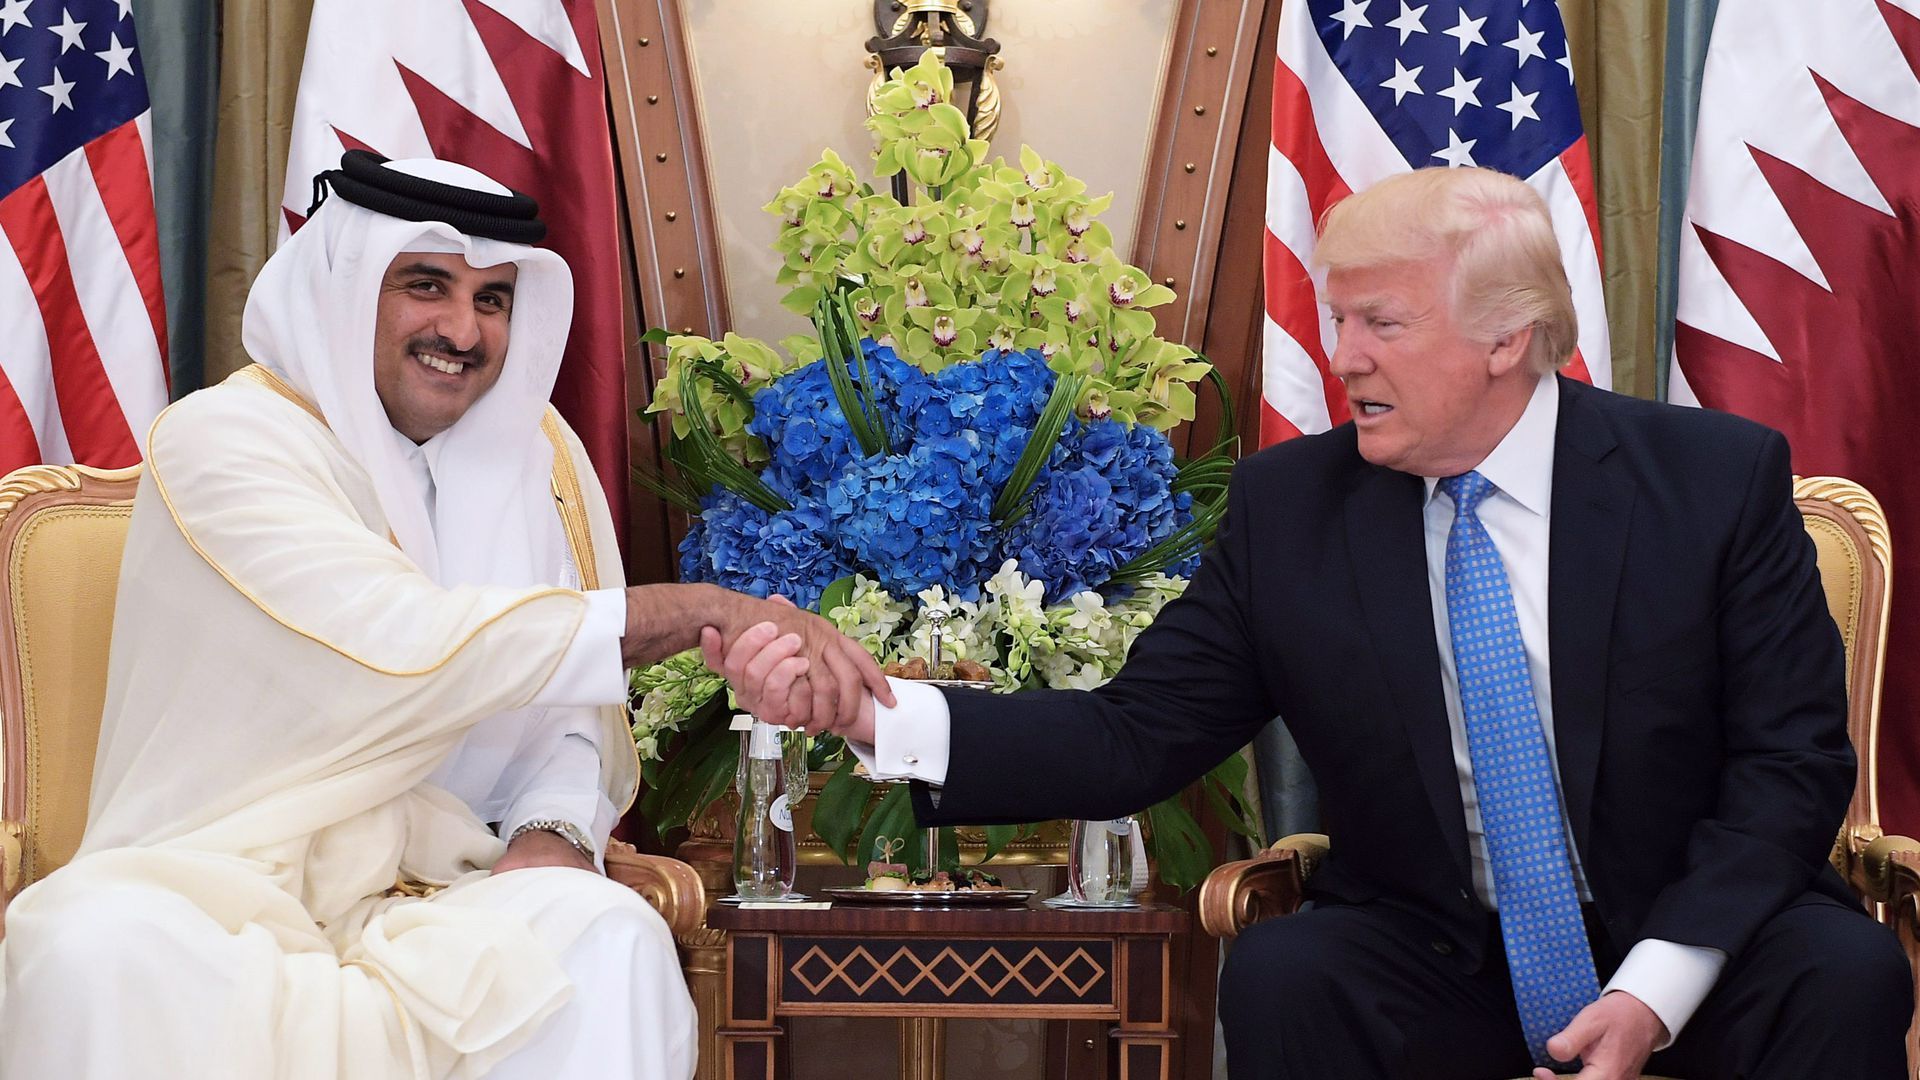 U.S. President Donald Trump and Qatar's Emir Sheikh Tamim Bin Hamad Al-Thani take part in a bilateral meeting in Riyadh on May 21, 2017. Photo: MANDEL NGAN / AFP / Getty Images